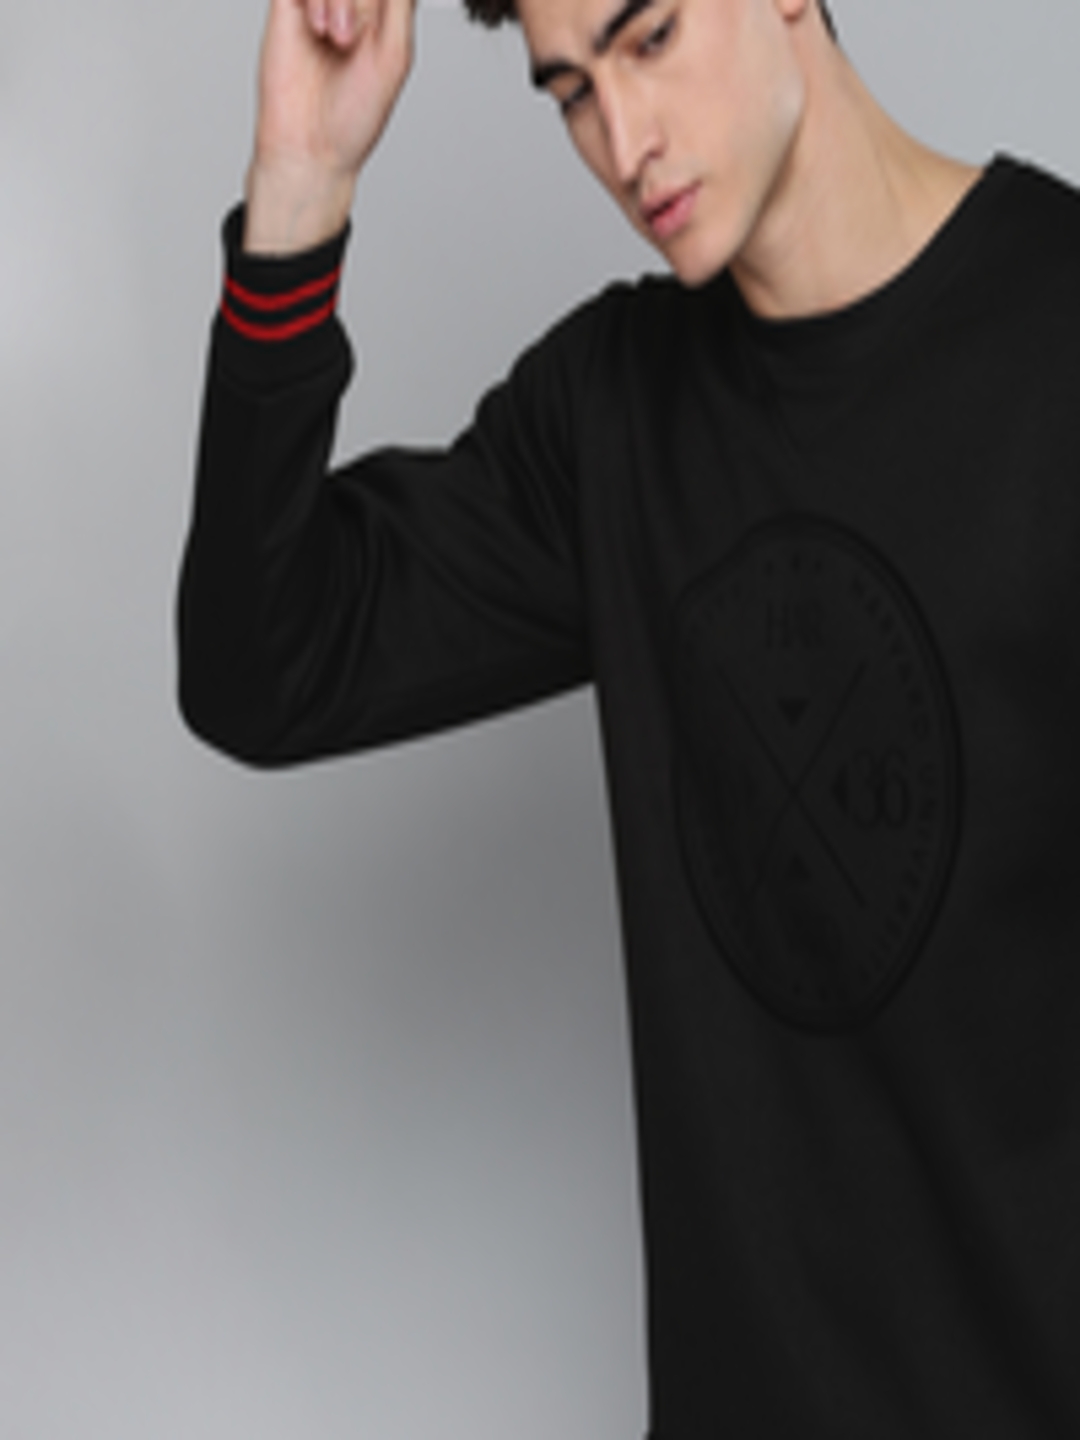 Buy Harvard Men Black Printed Sweatshirt - Sweatshirts for Men 9298513 ...